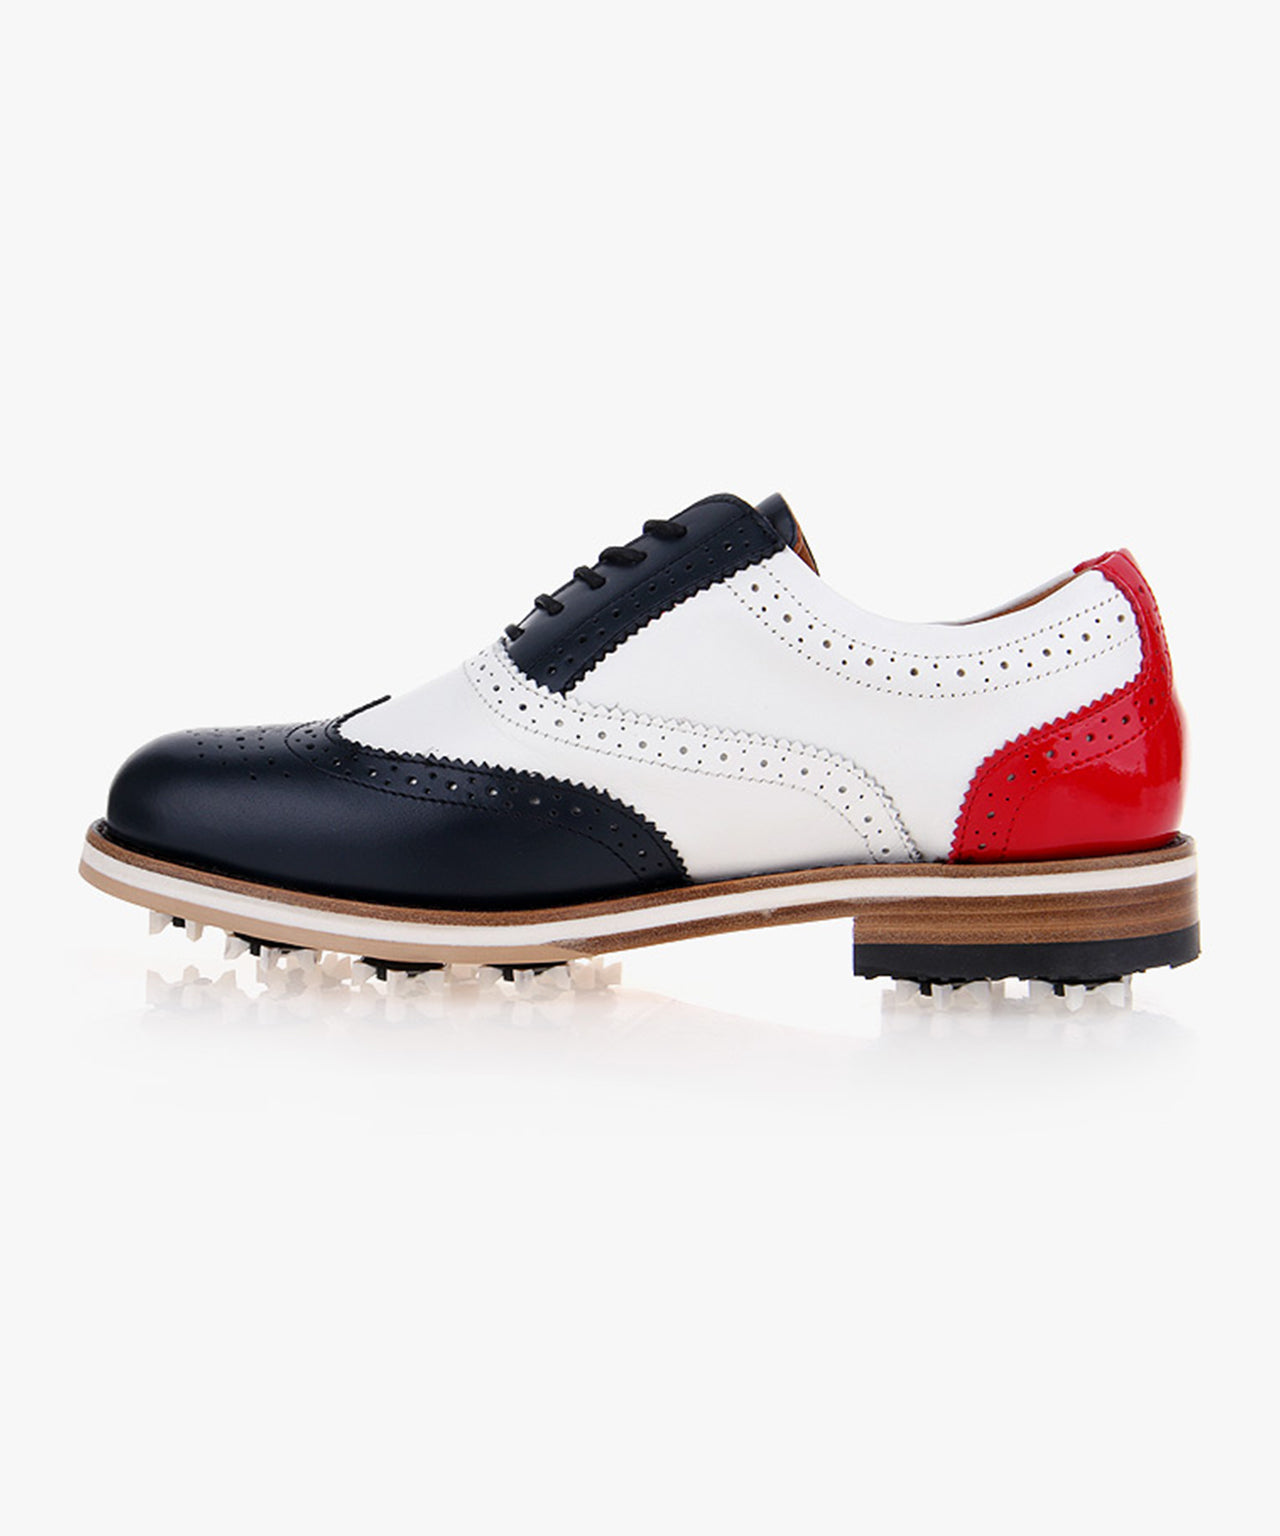 HENRY STUART Mysuit Classic Men's Spike Golf Shoes 105 - Navy